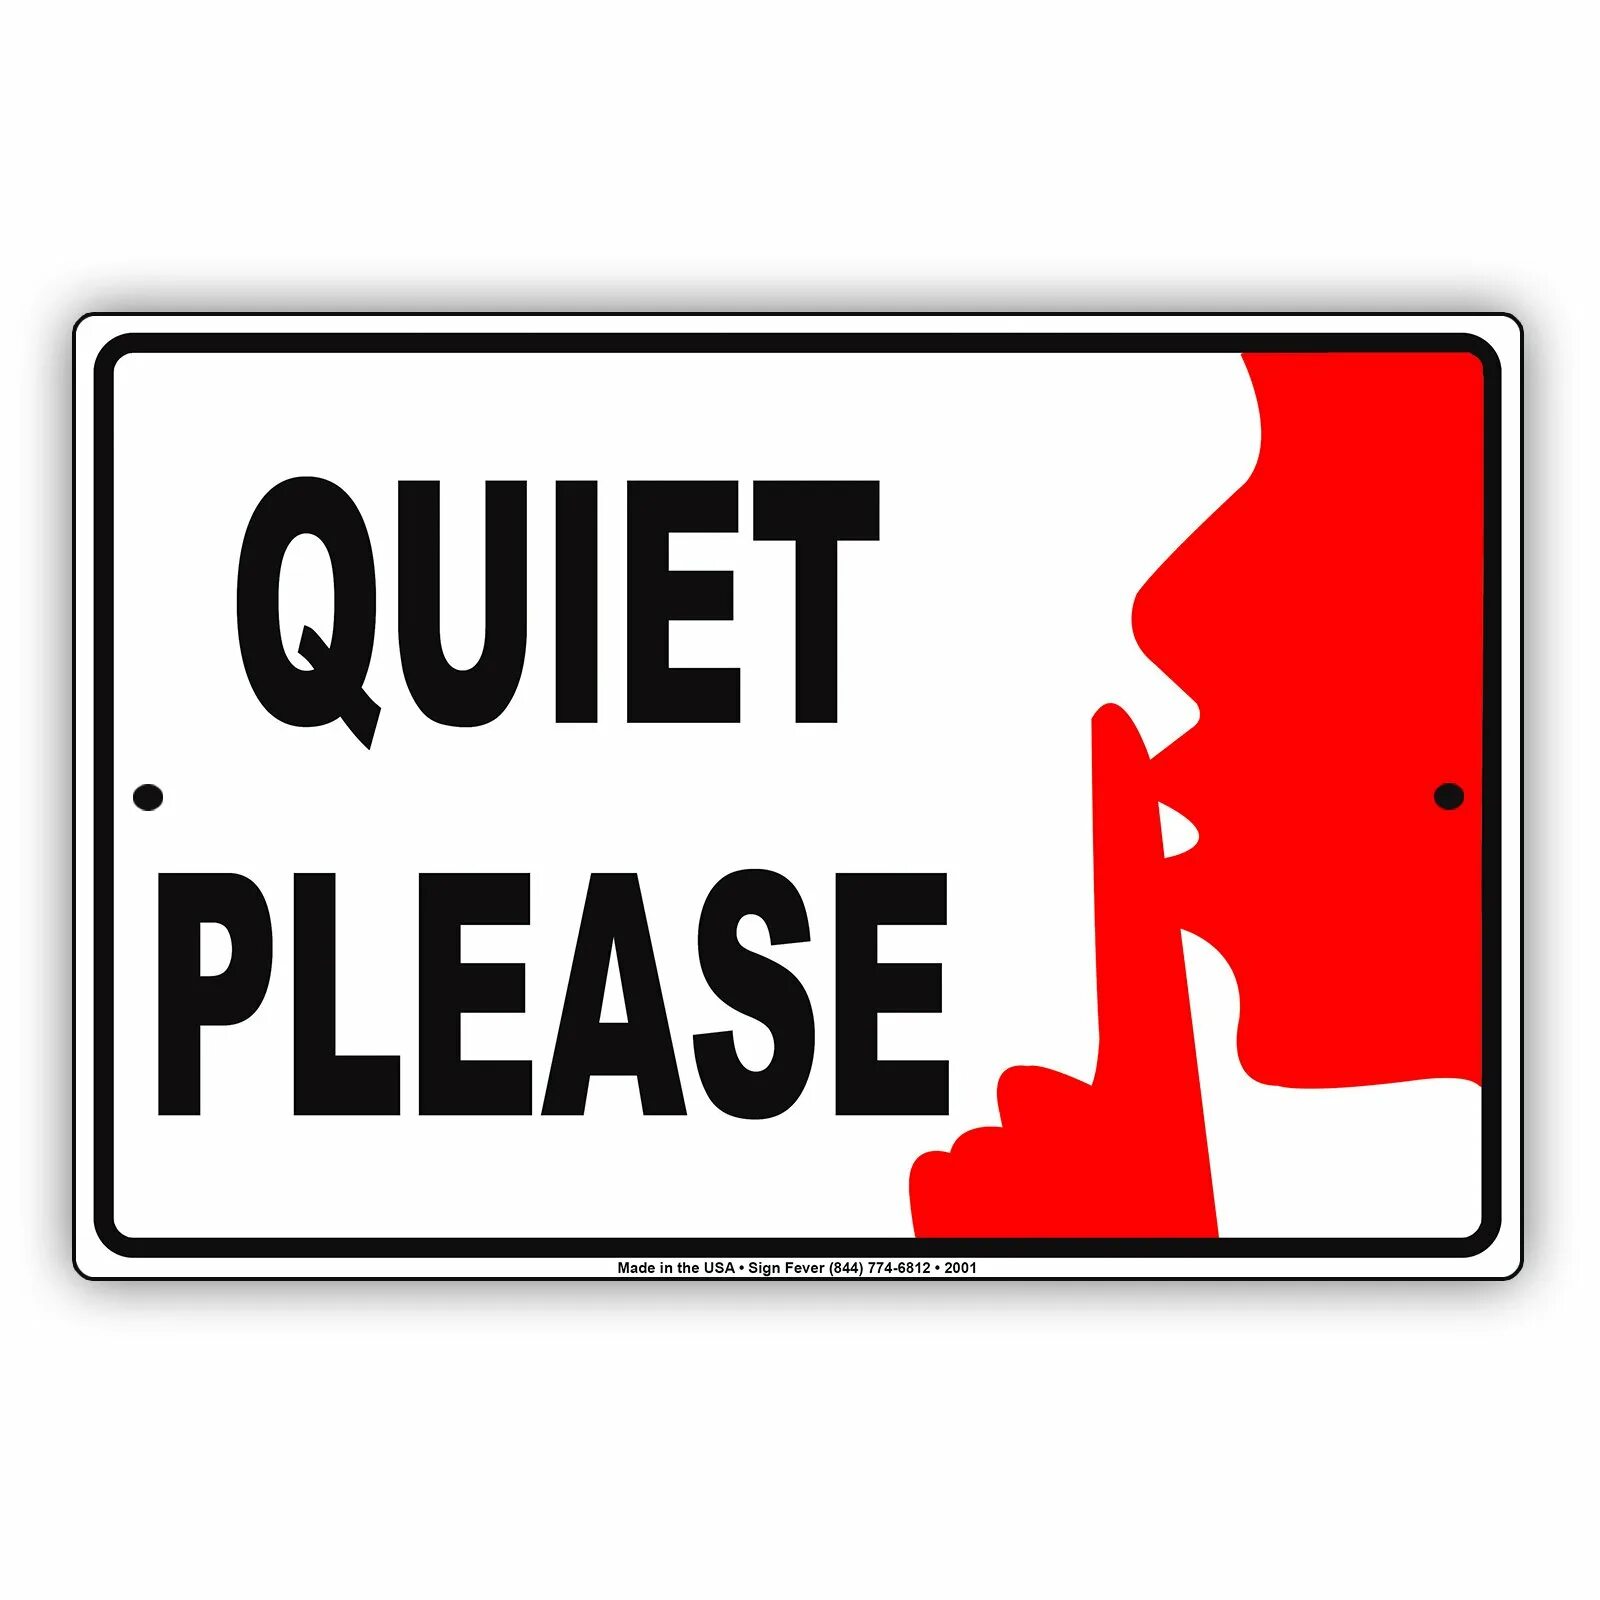 Наклейка be quiet. BEQUIET знак. Please be quiet знак. Keep quiet знак.